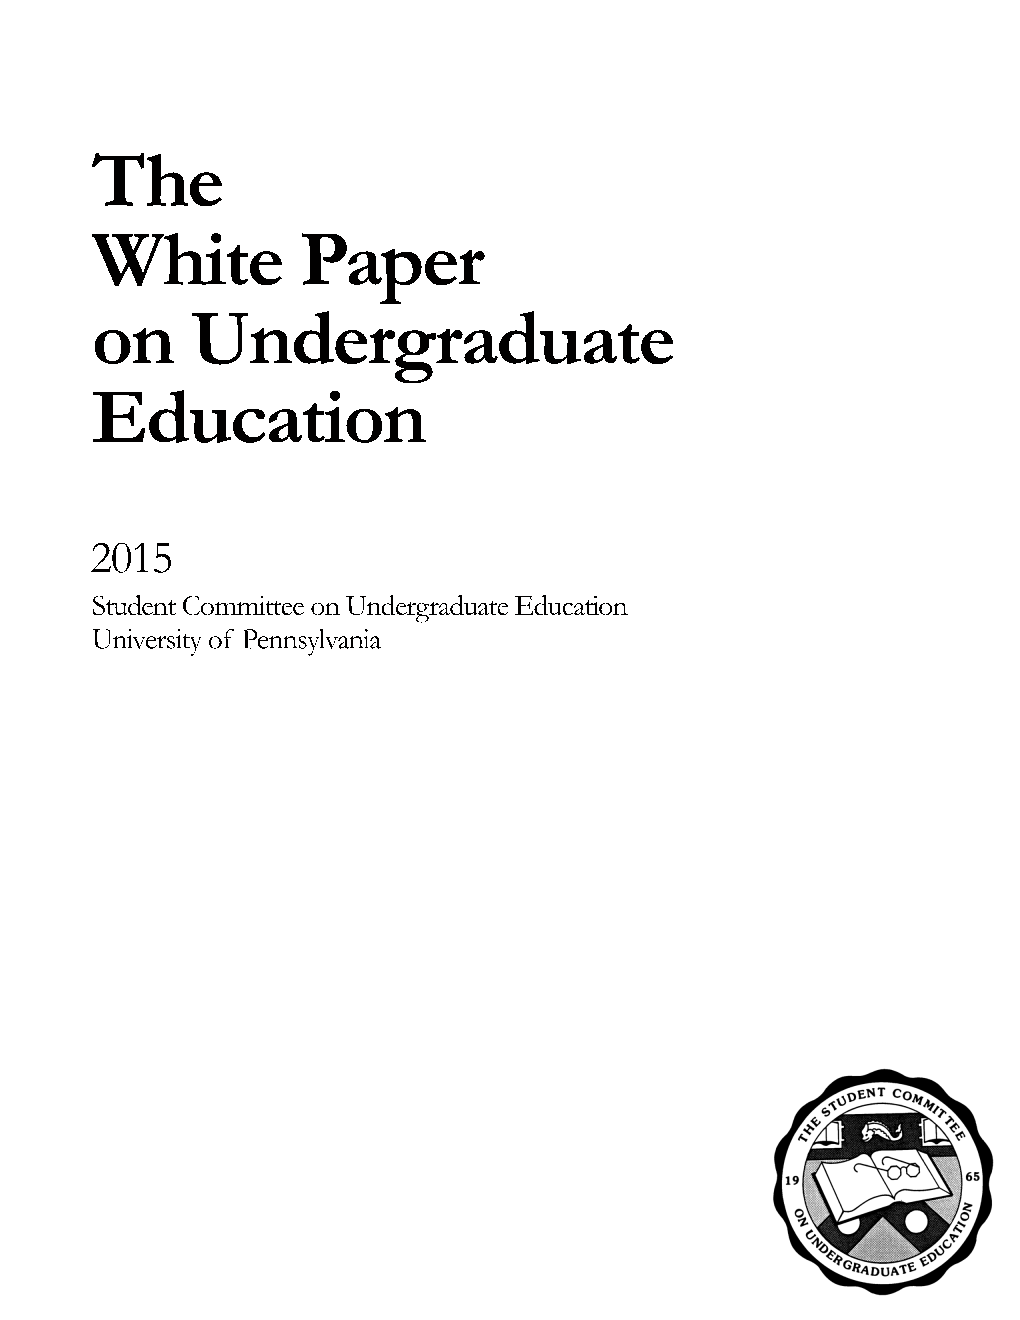 The White Paper on Undergraduate Education